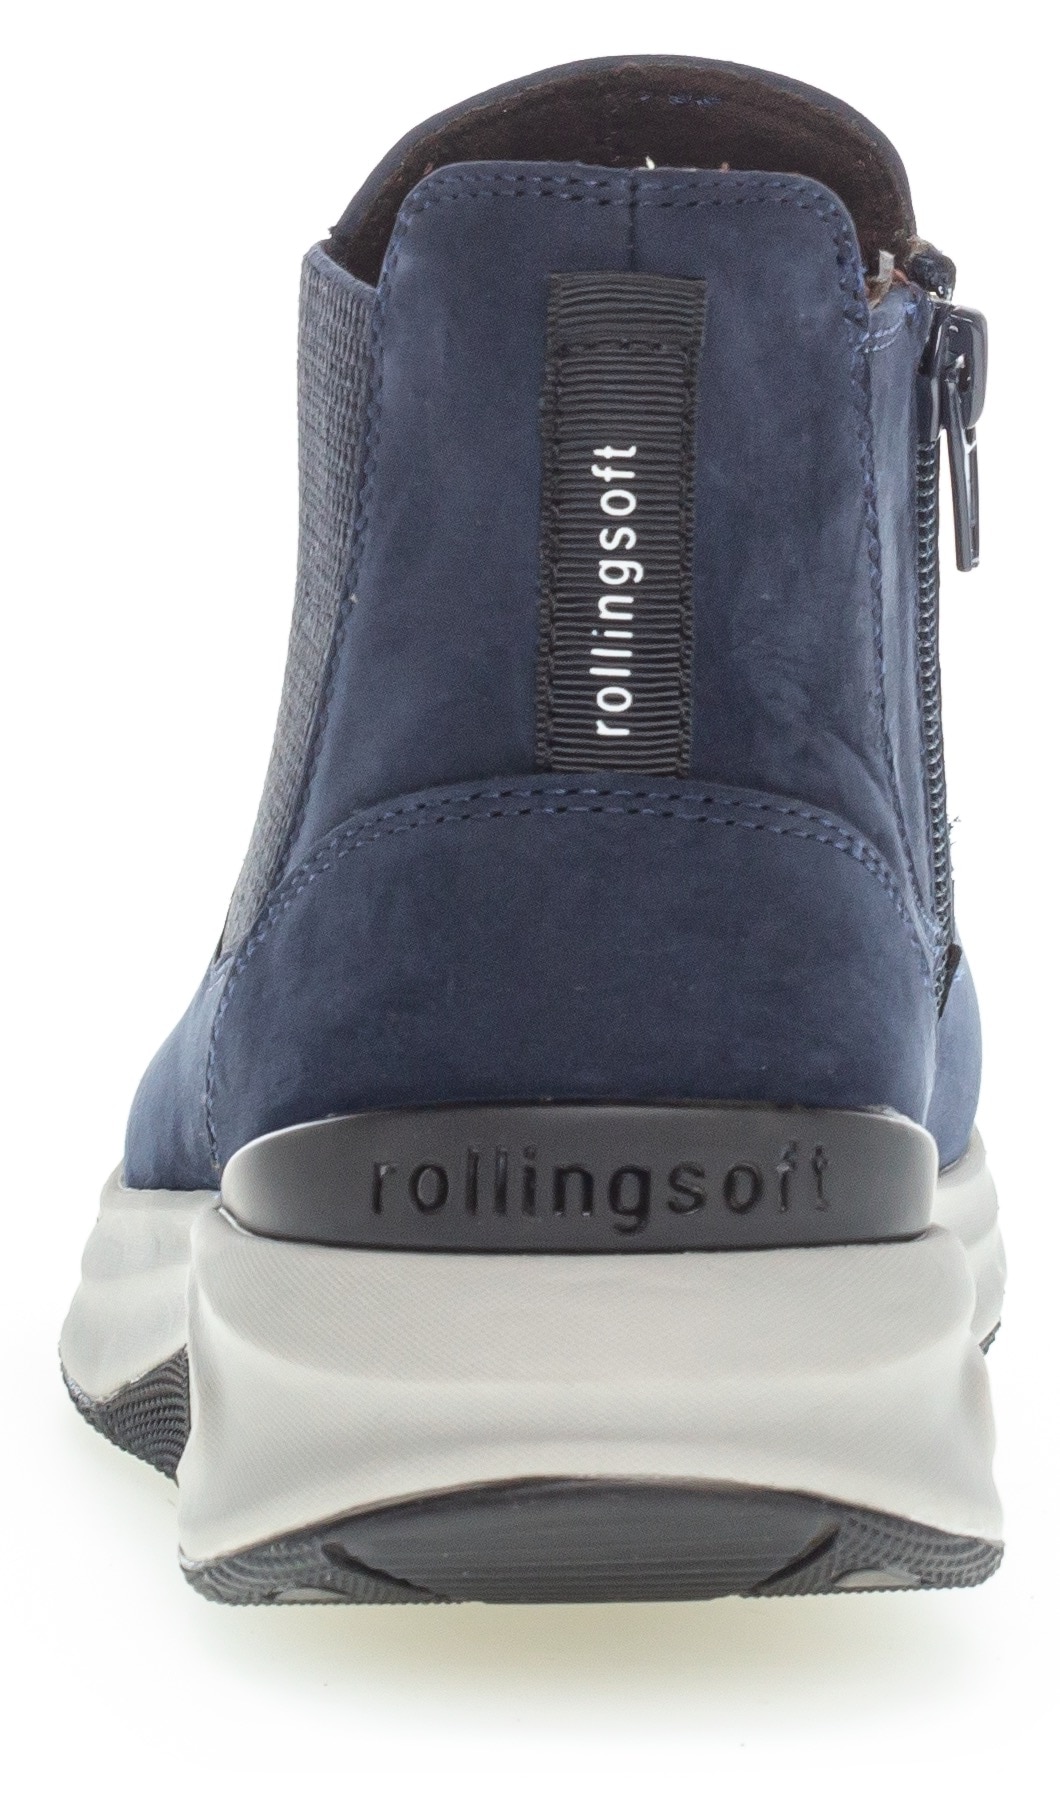 Gabor Rollingsoft Chelseaboots, mit Logo an der Ferse